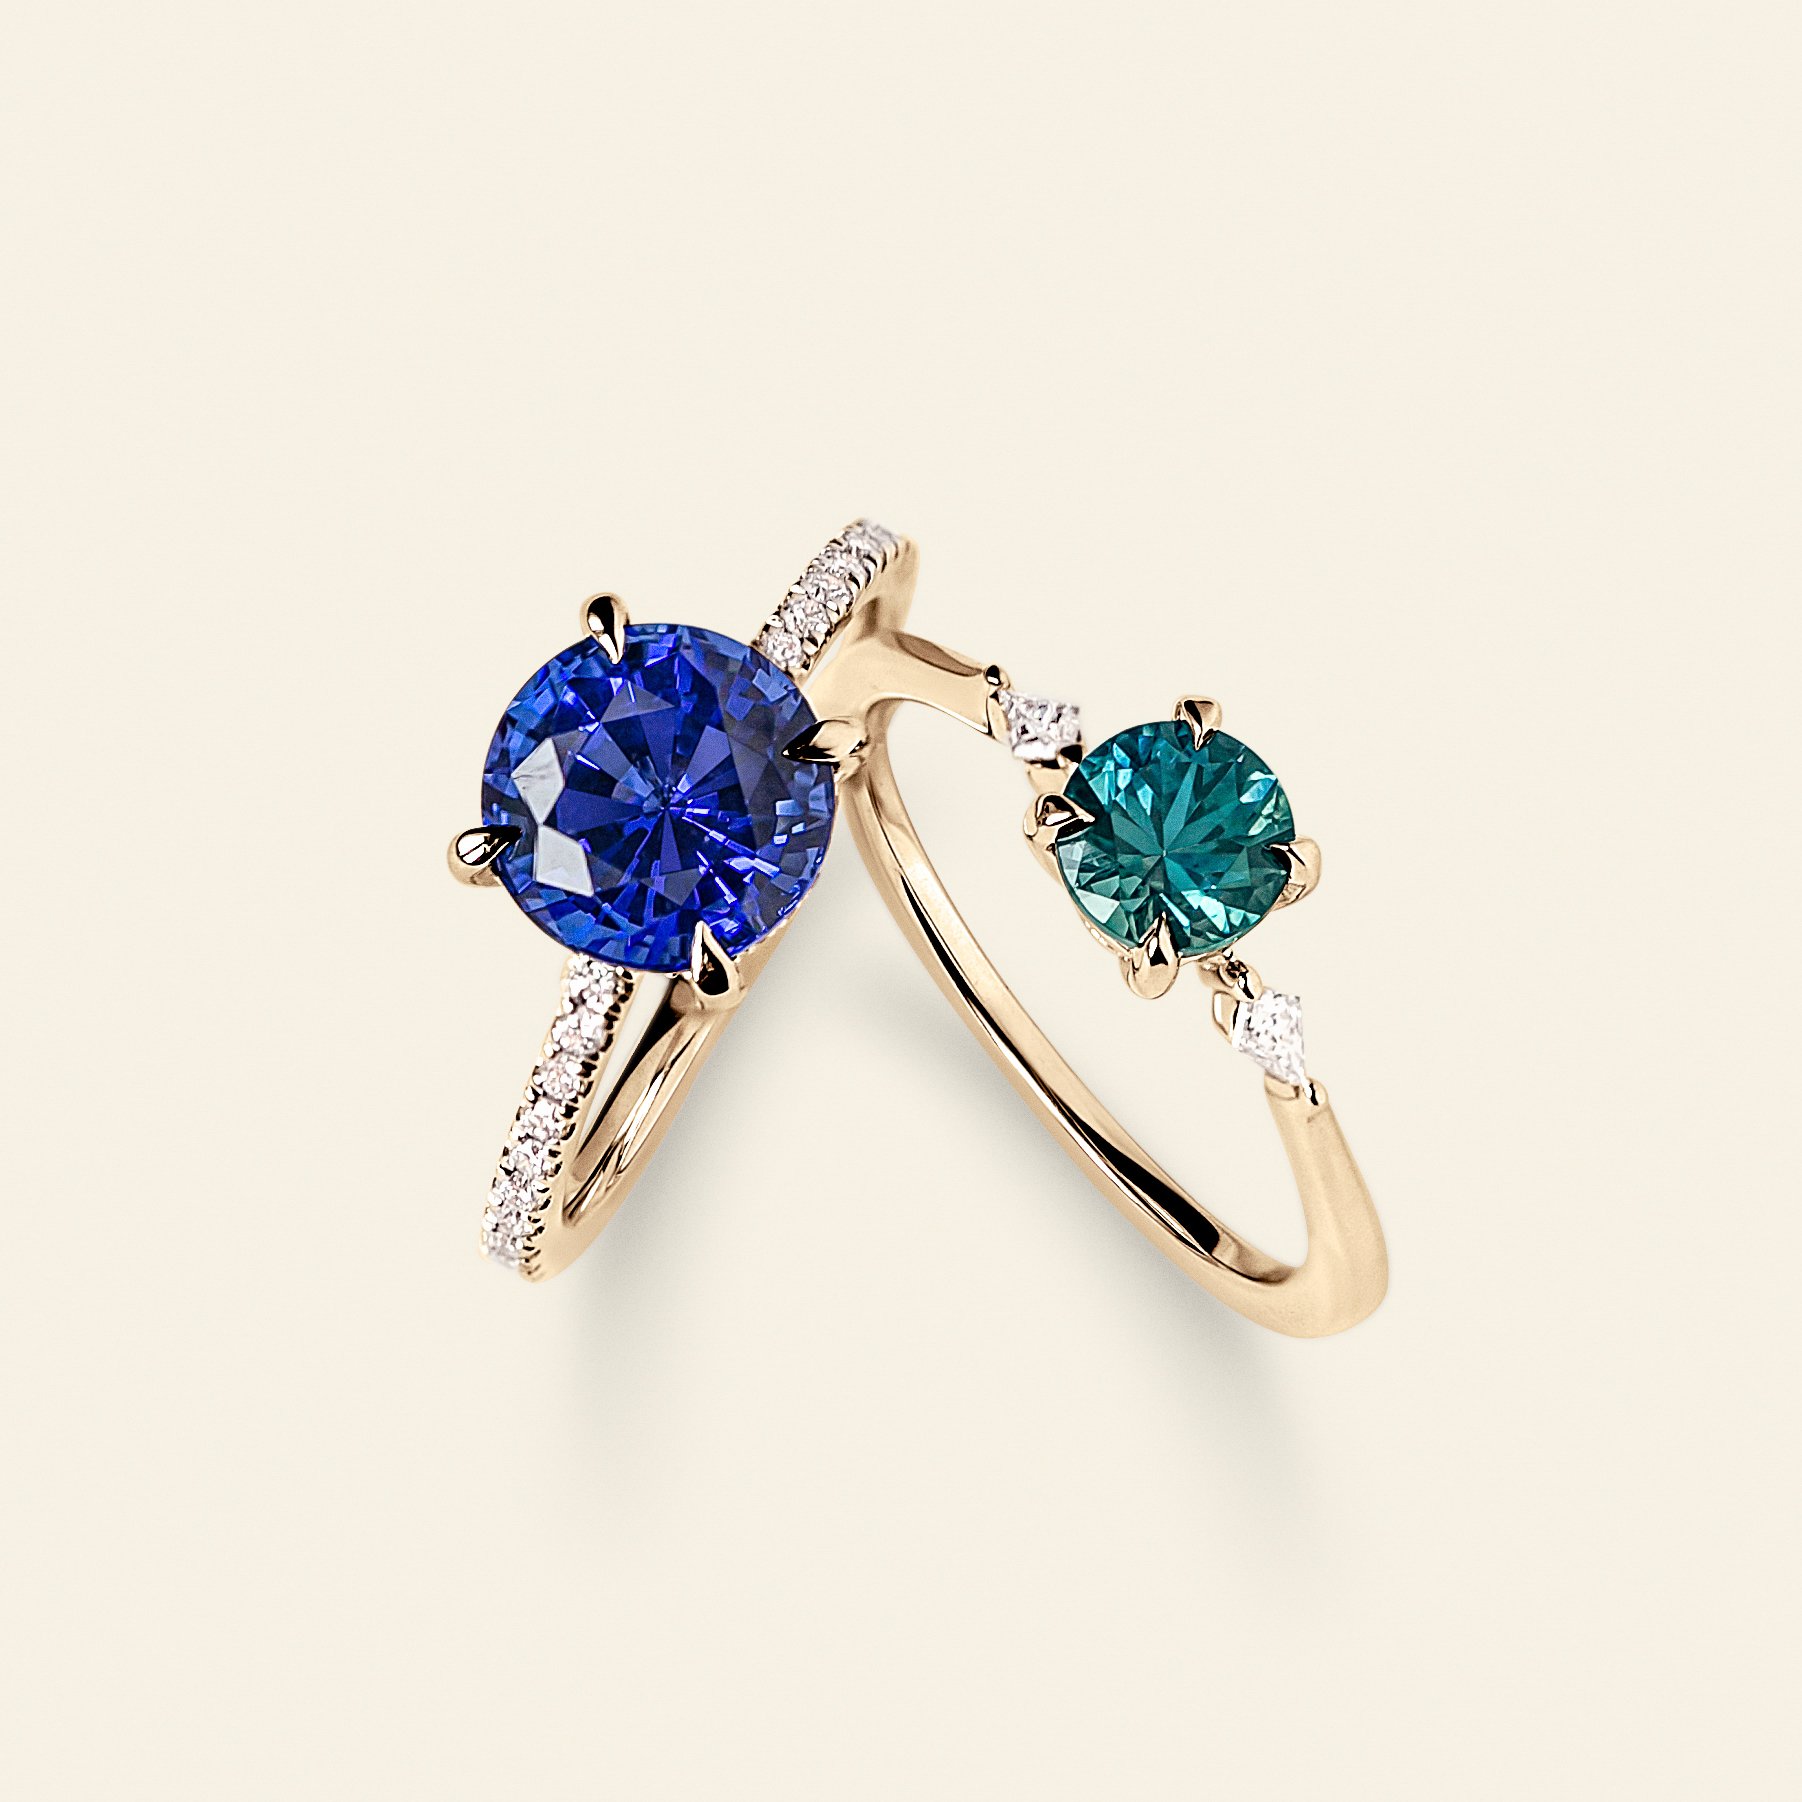 21 Dark Blue Crystal Names: Gemstones Images  : Spectacular Gems to Adorn Your Collection